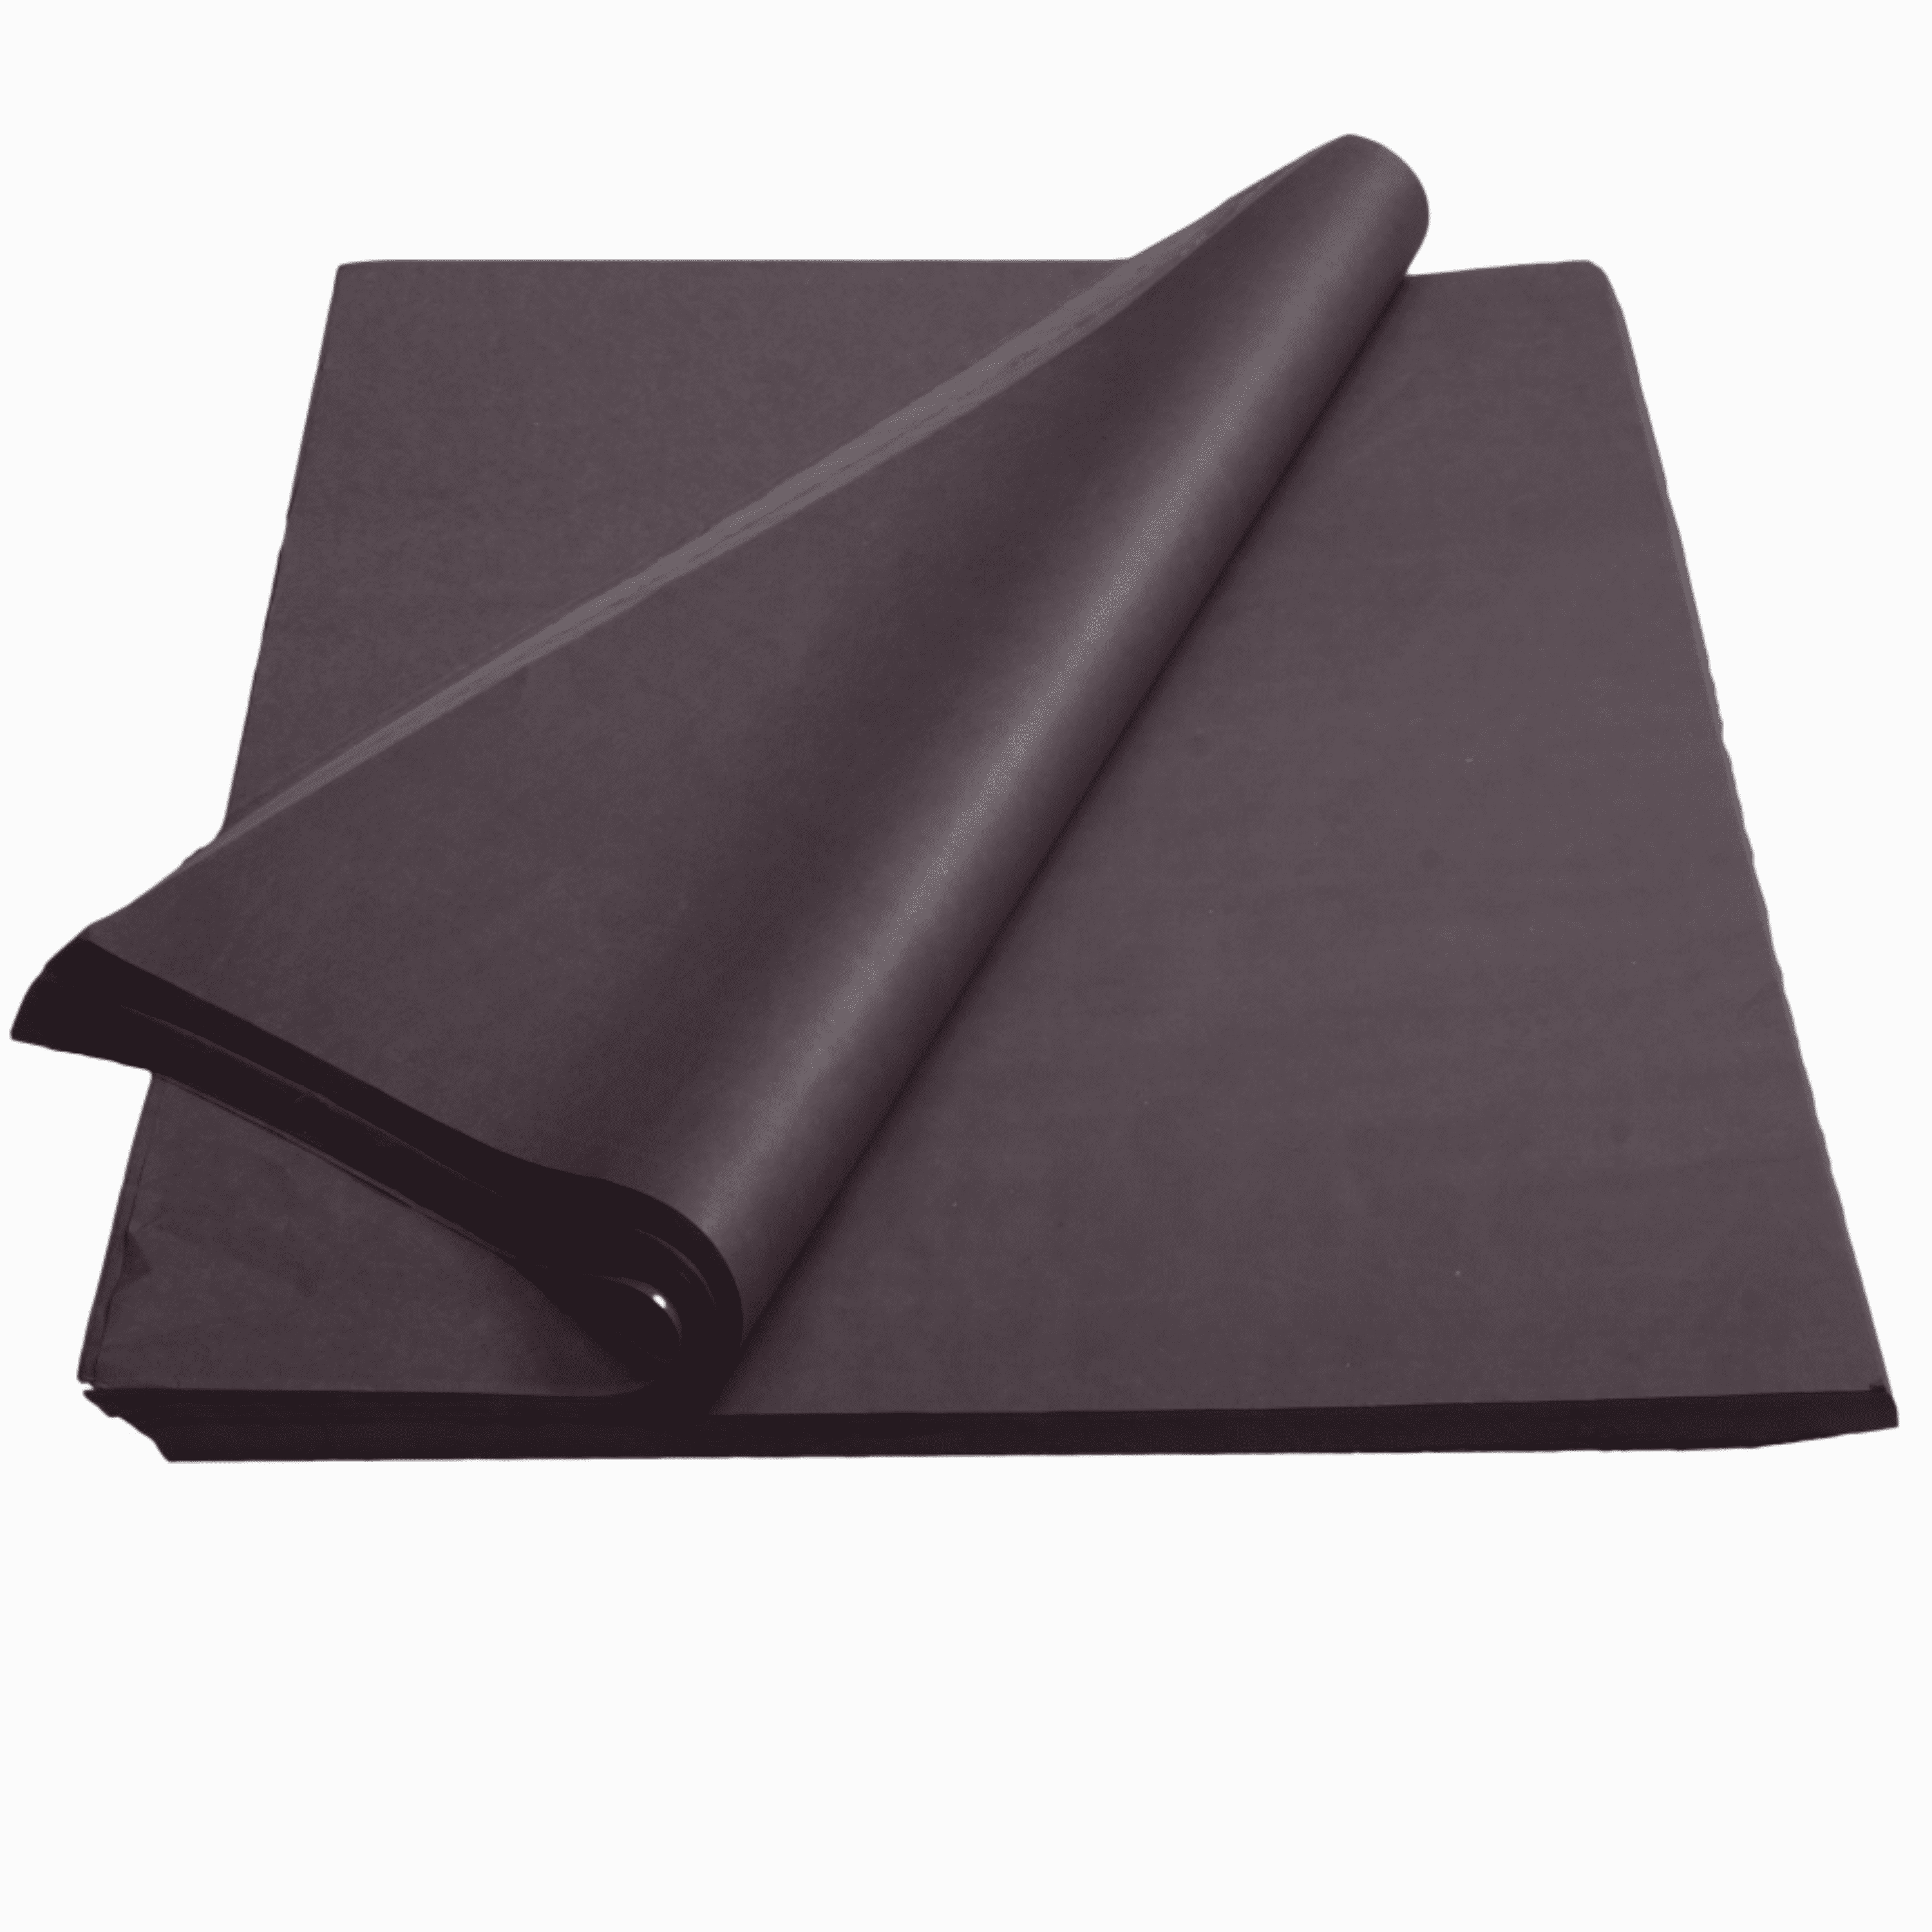 Amscan Black Tissue Paper - 8ct. (20 x 20) - Party Adventure